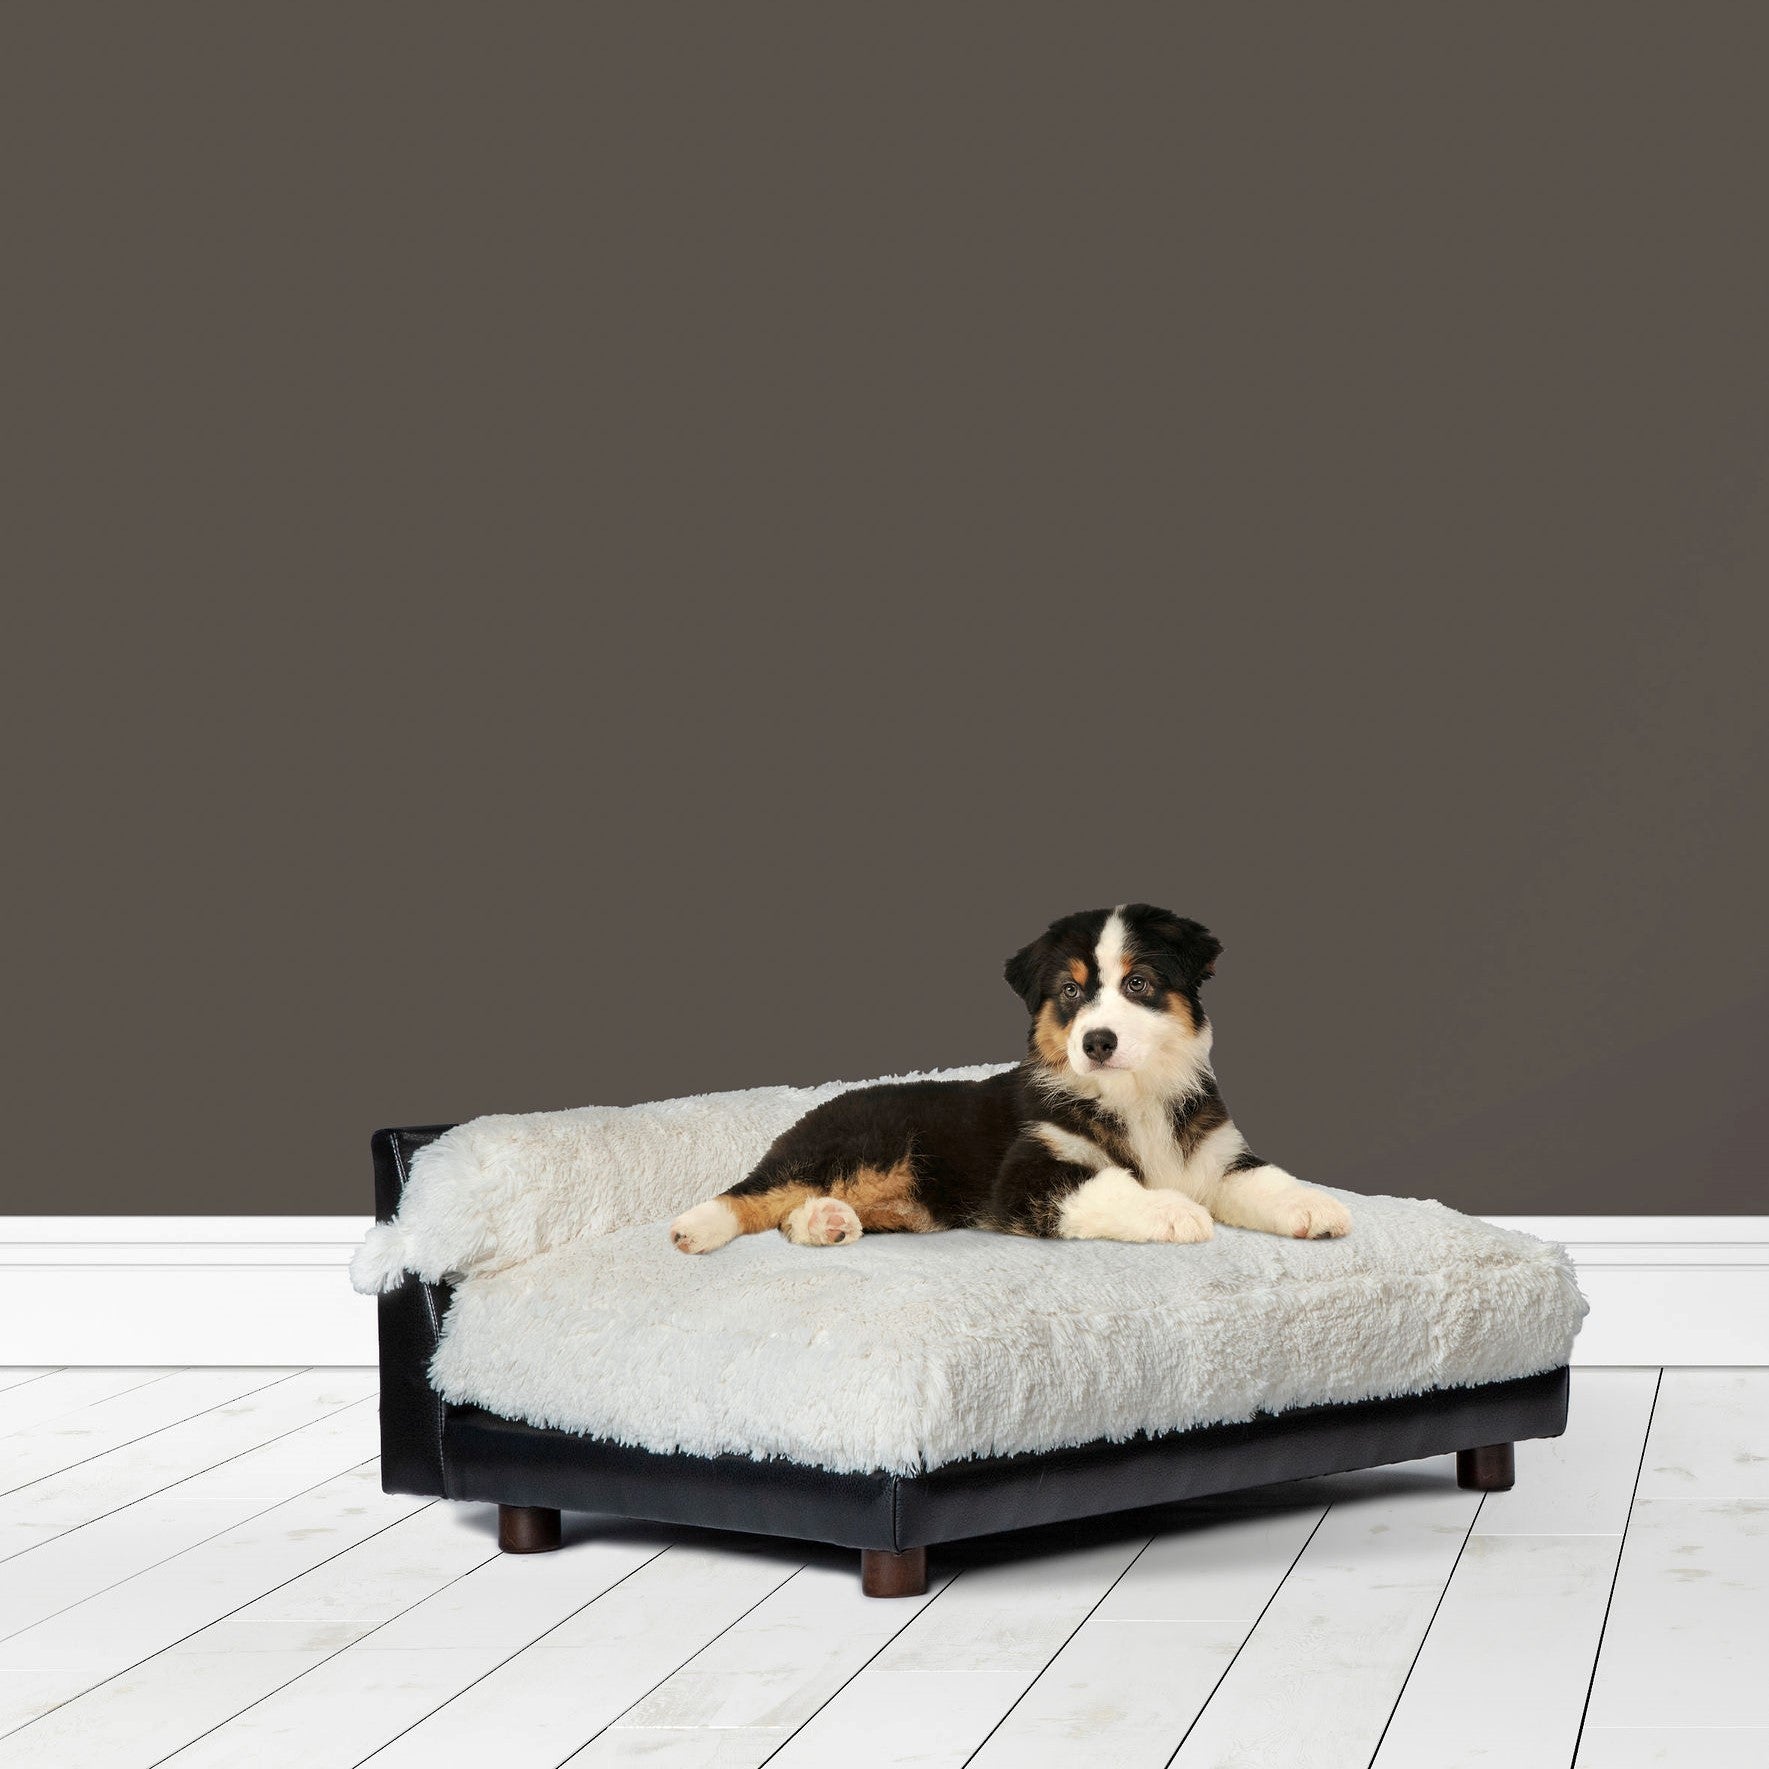 Club Nine Pets Roma Orthopedic Dog Bed， Small， Ivory